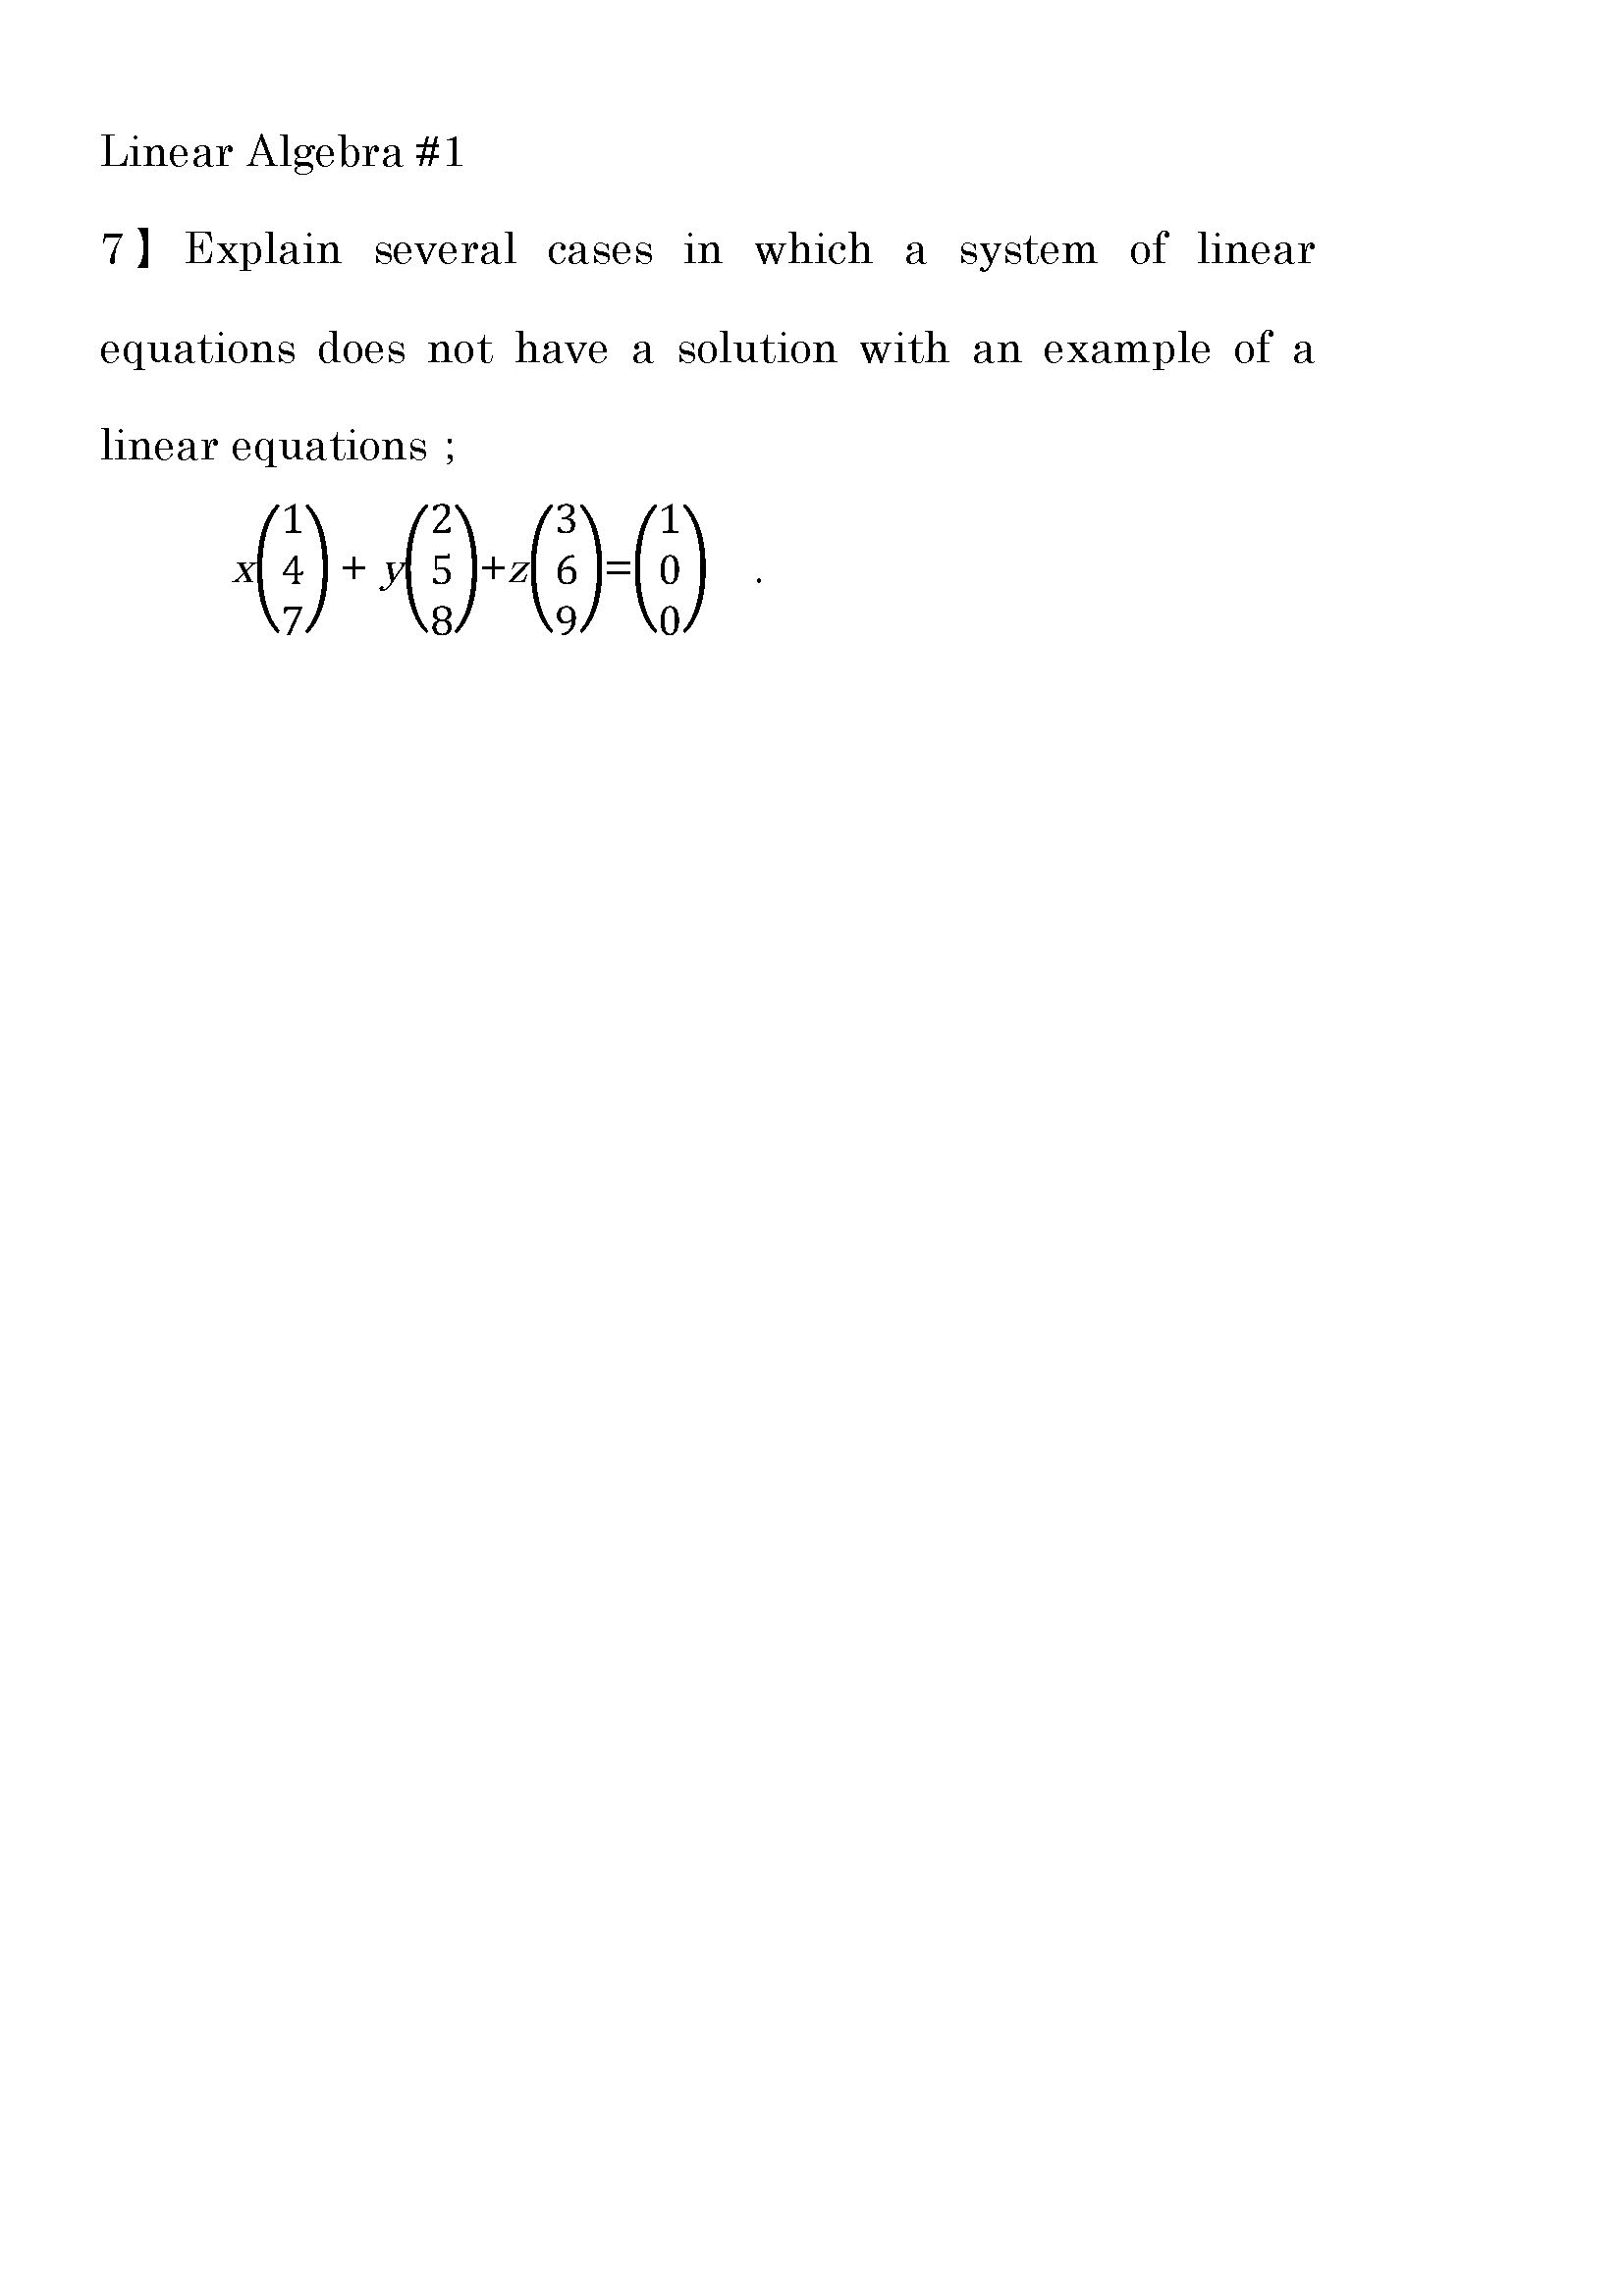 Linear_Algebra_Quiz_1-7-tate.jpg